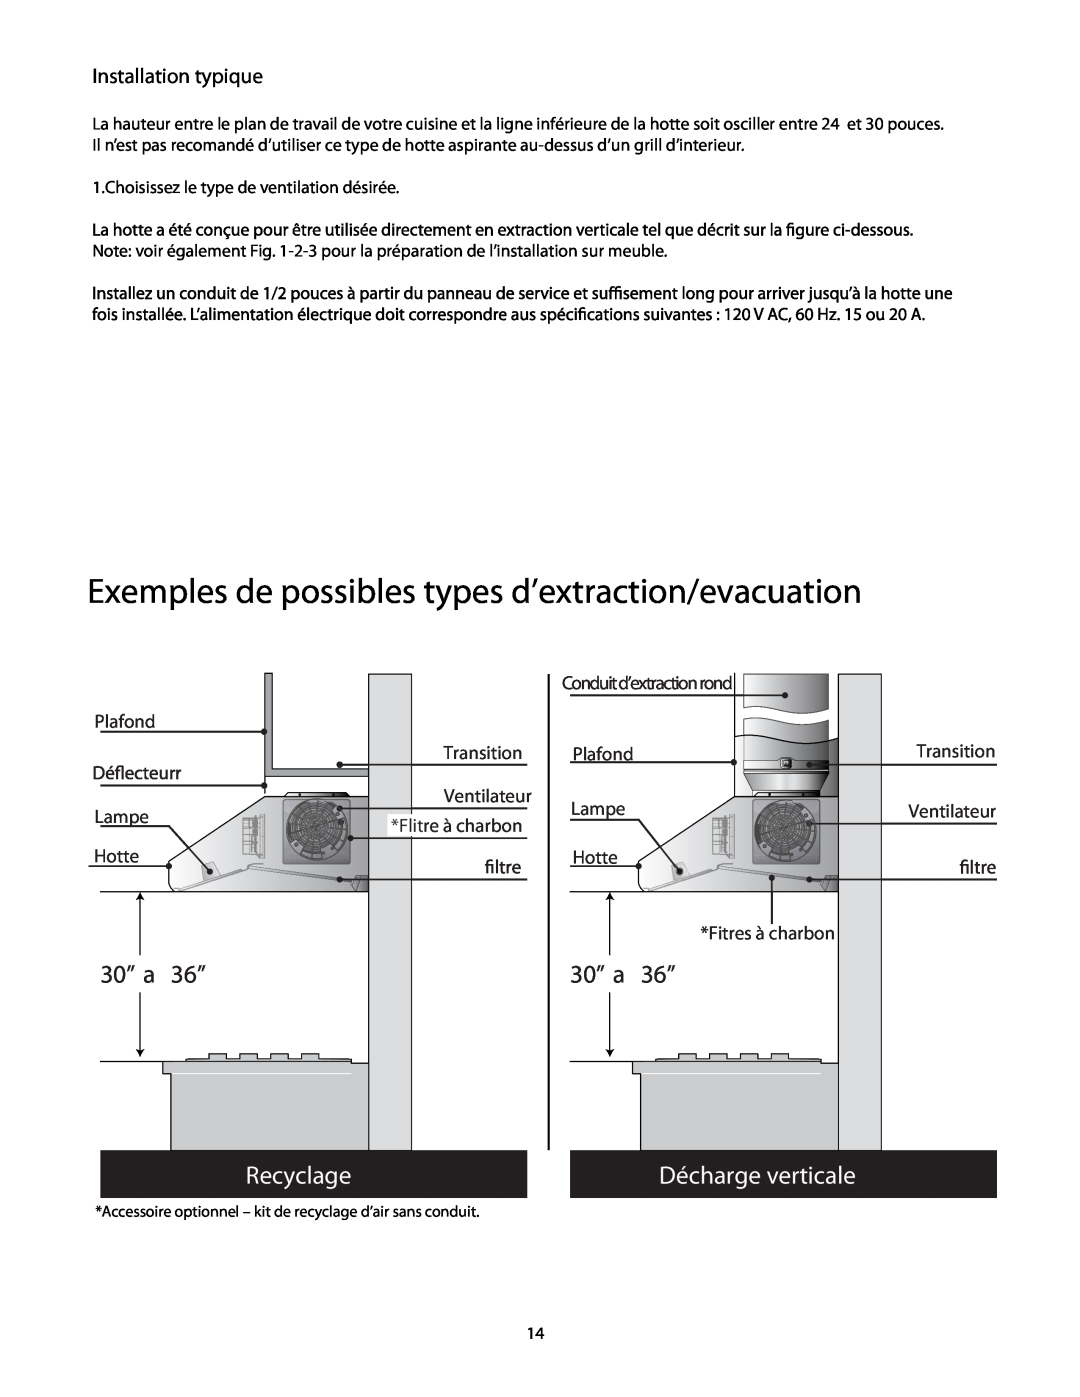 Thermador HMWB36 Exemples de possibles types d’extraction/evacuation, 30” a 36”, Recyclage, Décharge verticale, Plafond 